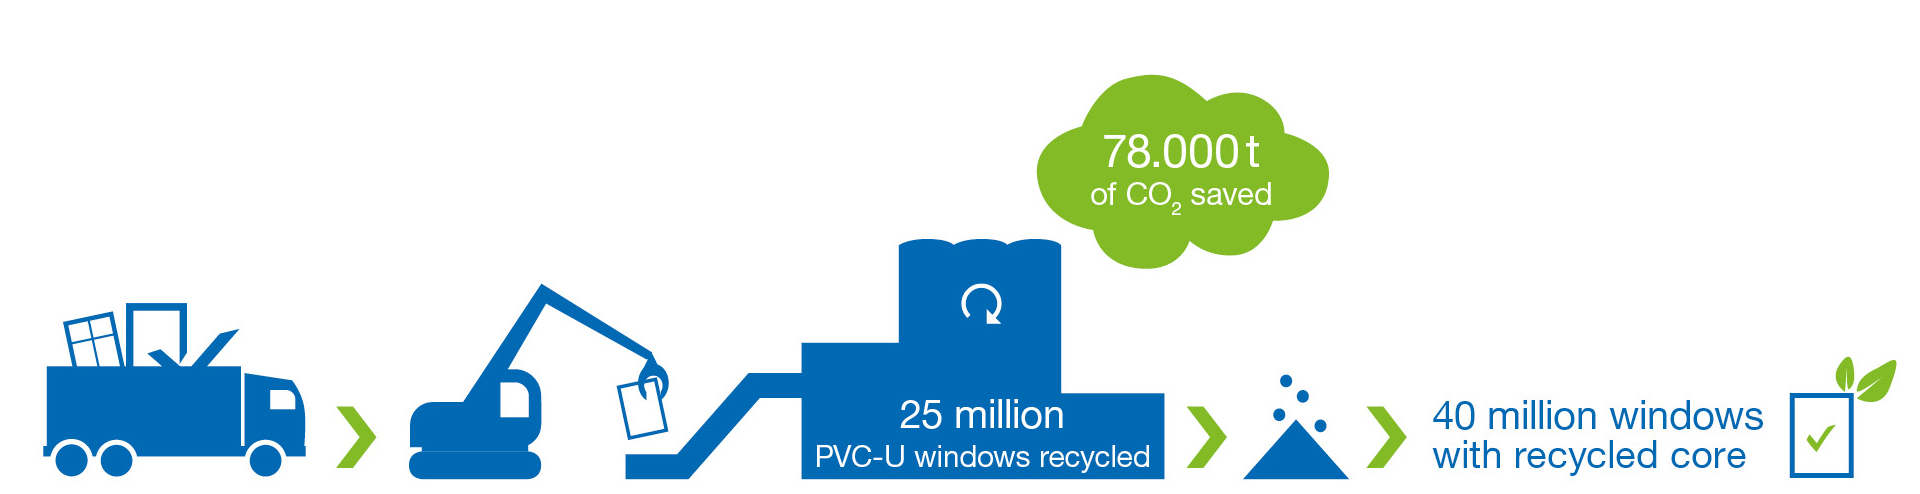 Recycling plastic windows sustainability